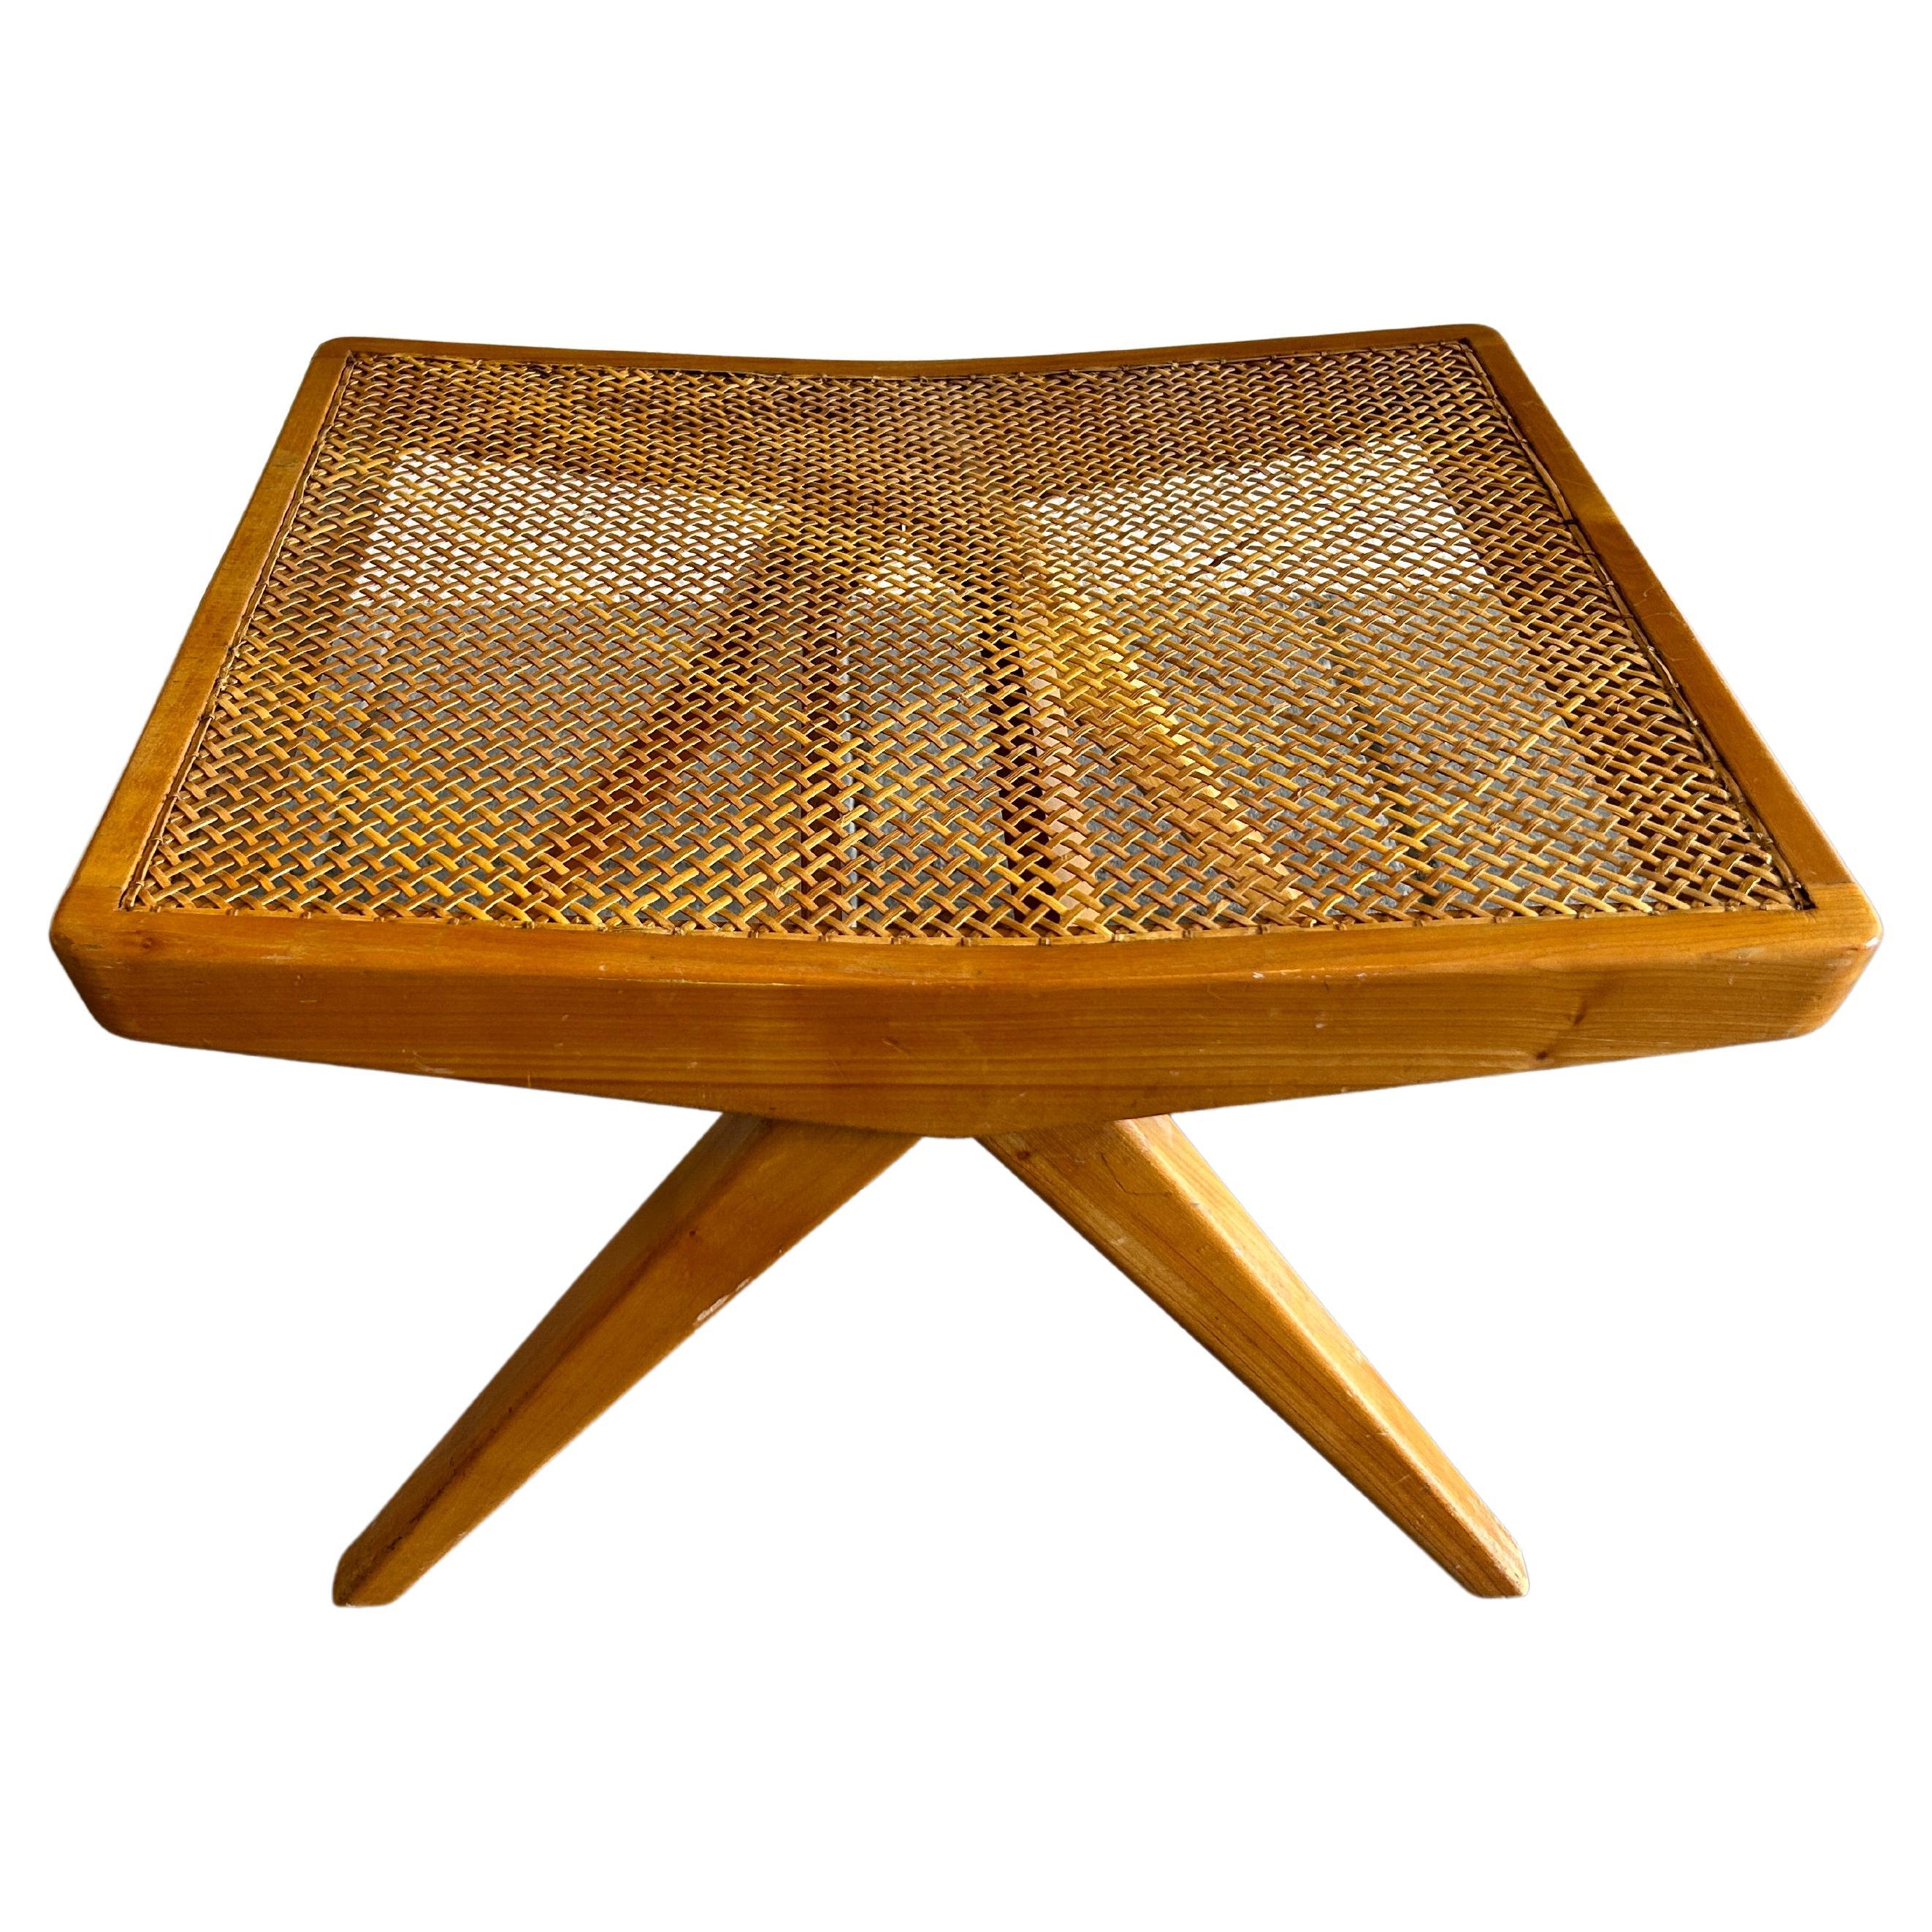 Unique mid century modern low cane maple blonde stool ottoman studio craft  For Sale